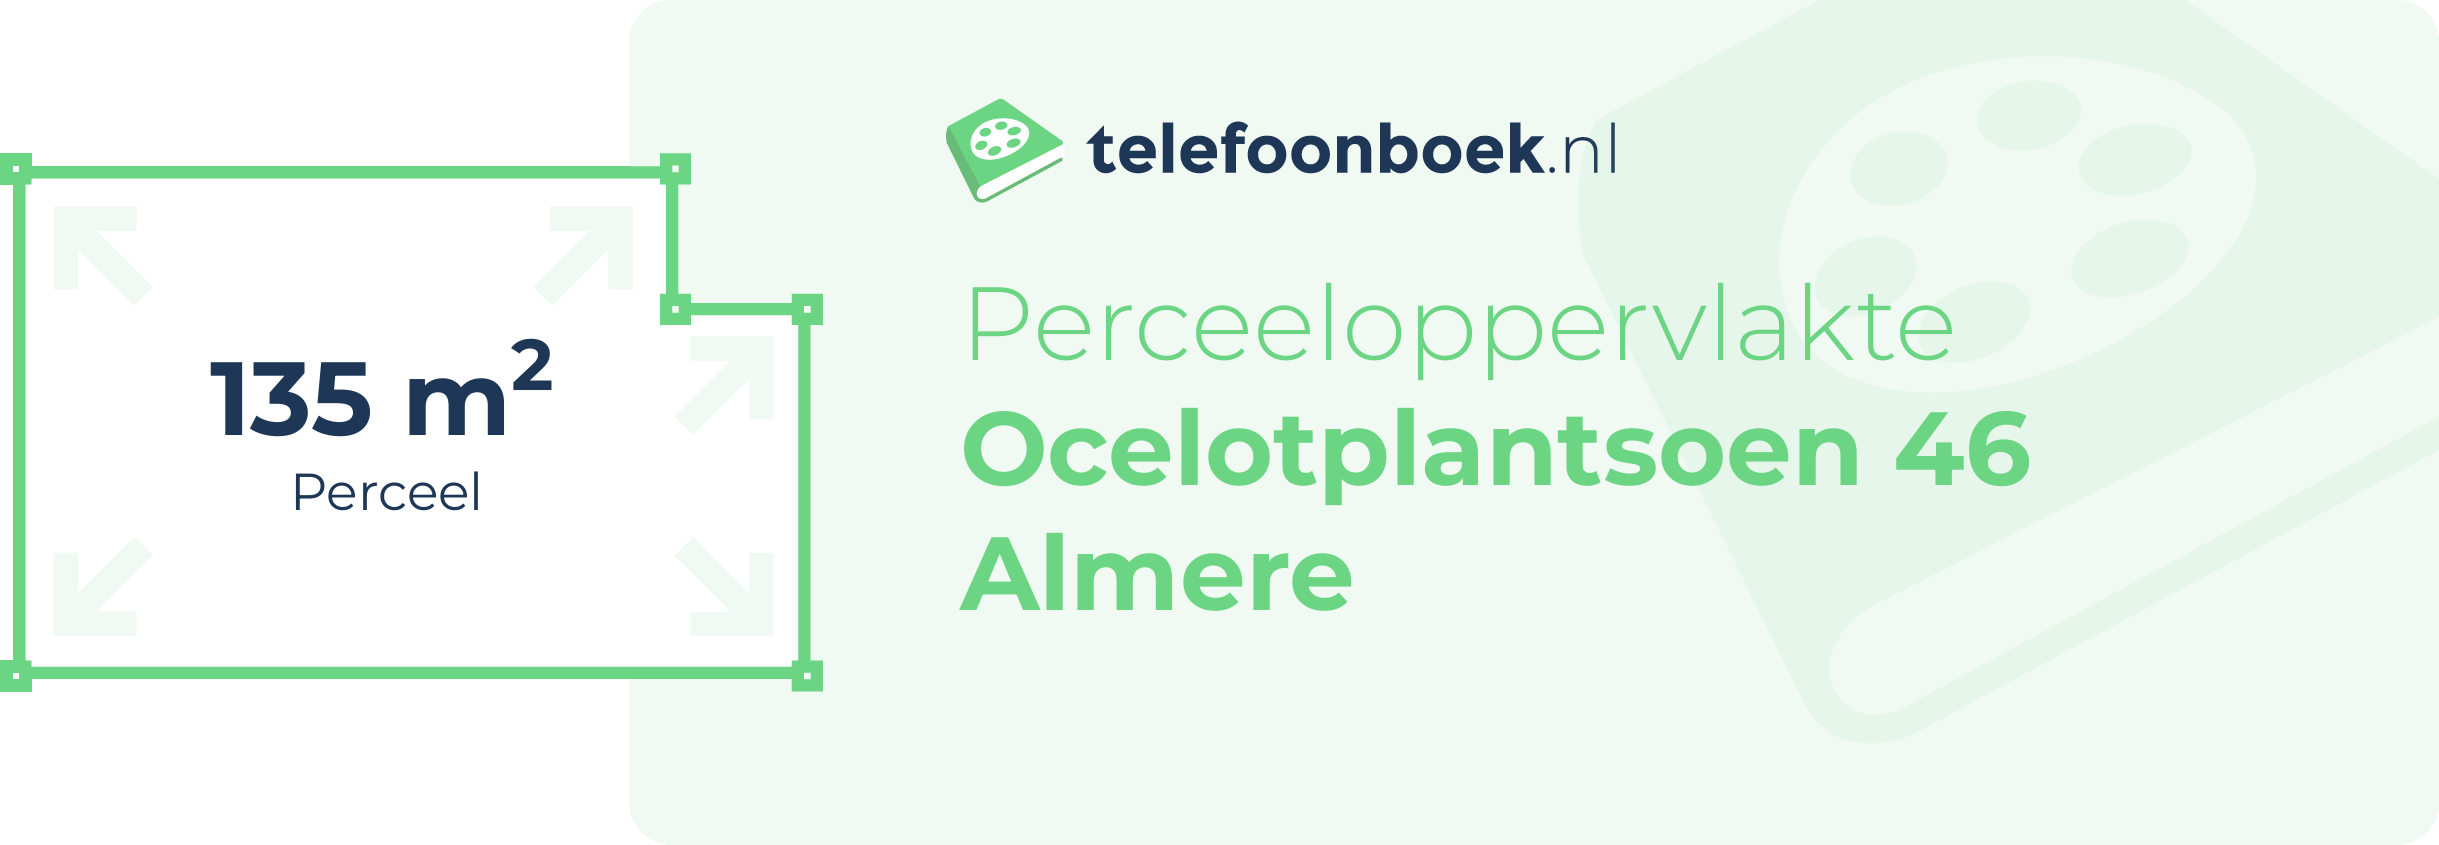 Perceeloppervlakte Ocelotplantsoen 46 Almere